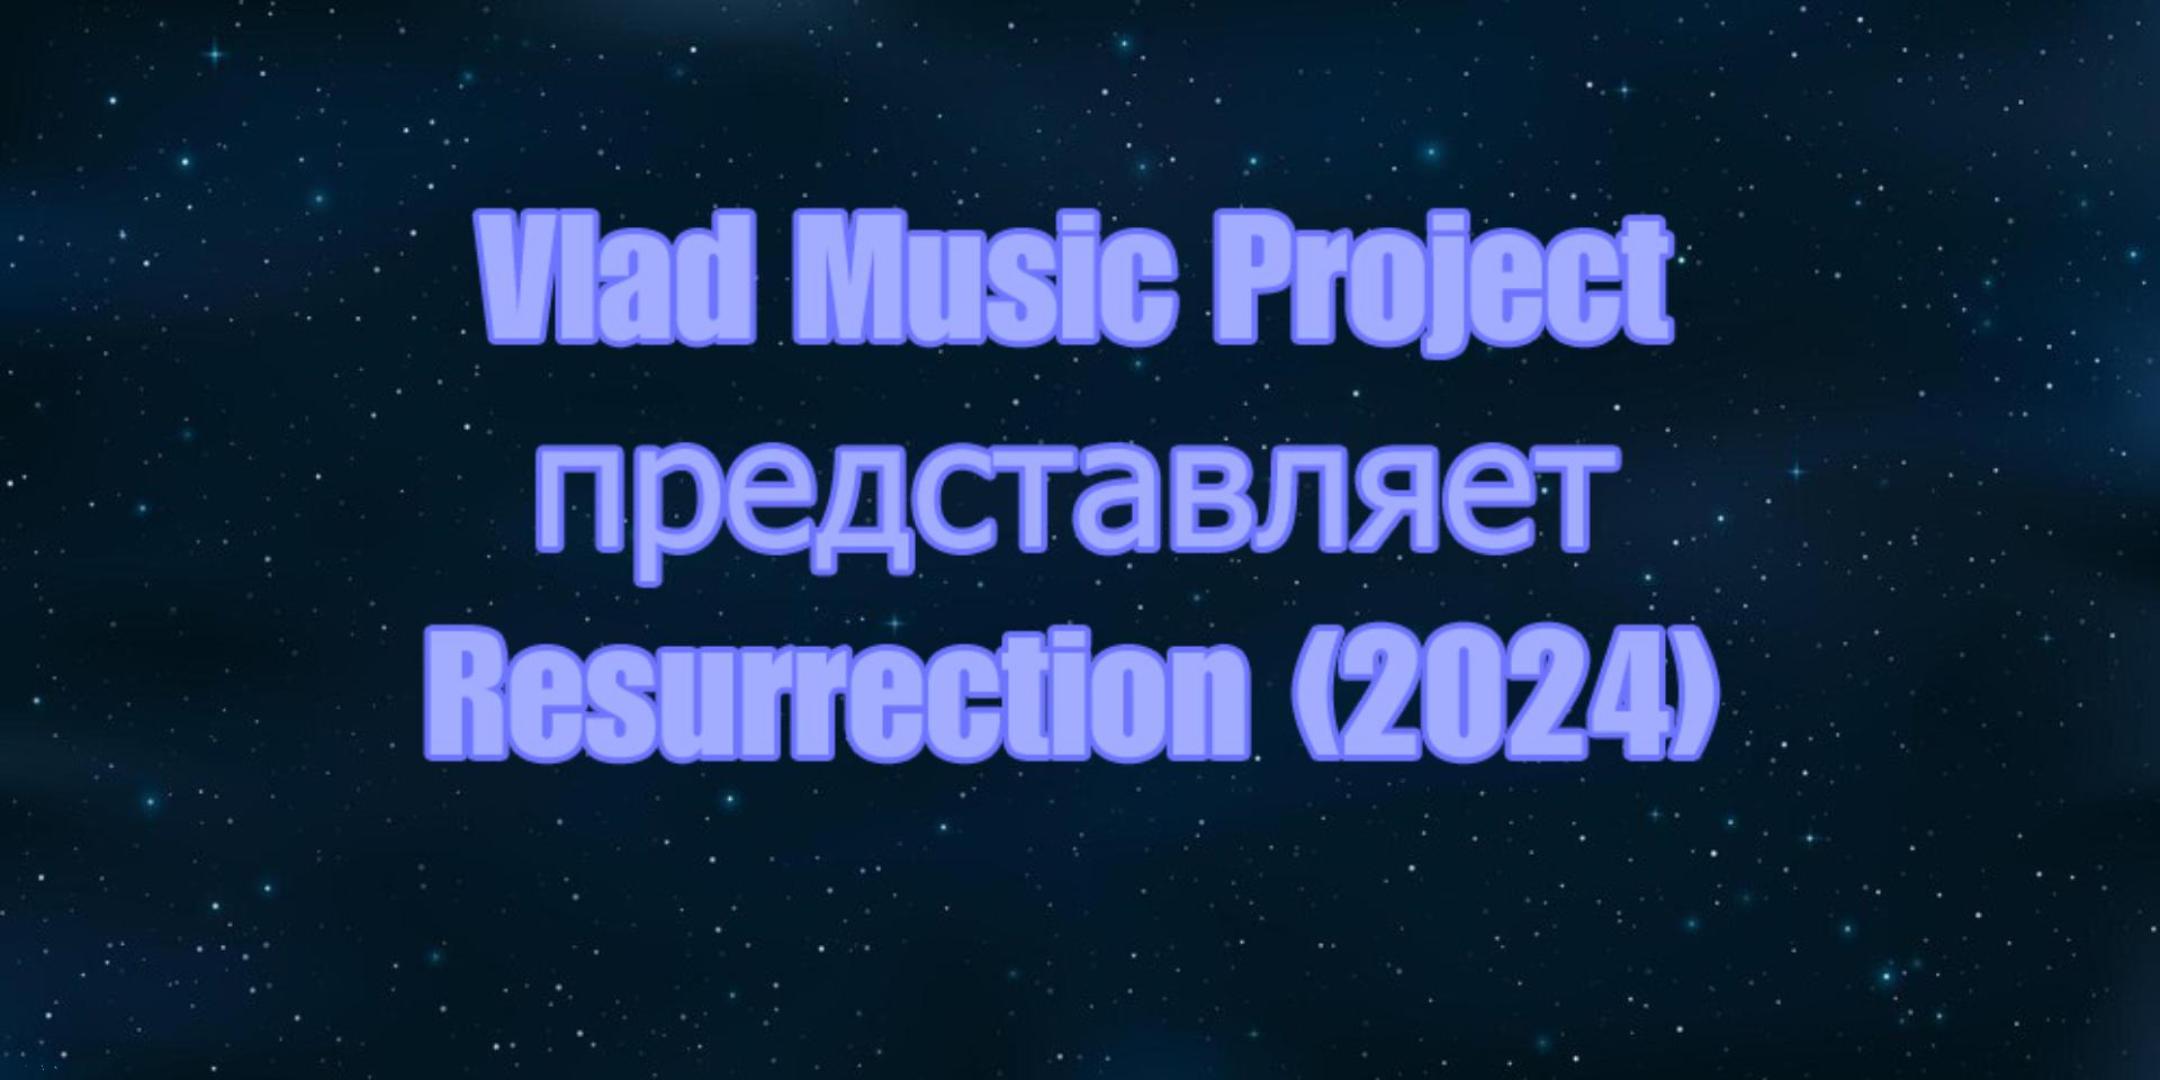 Resurrection (2024)